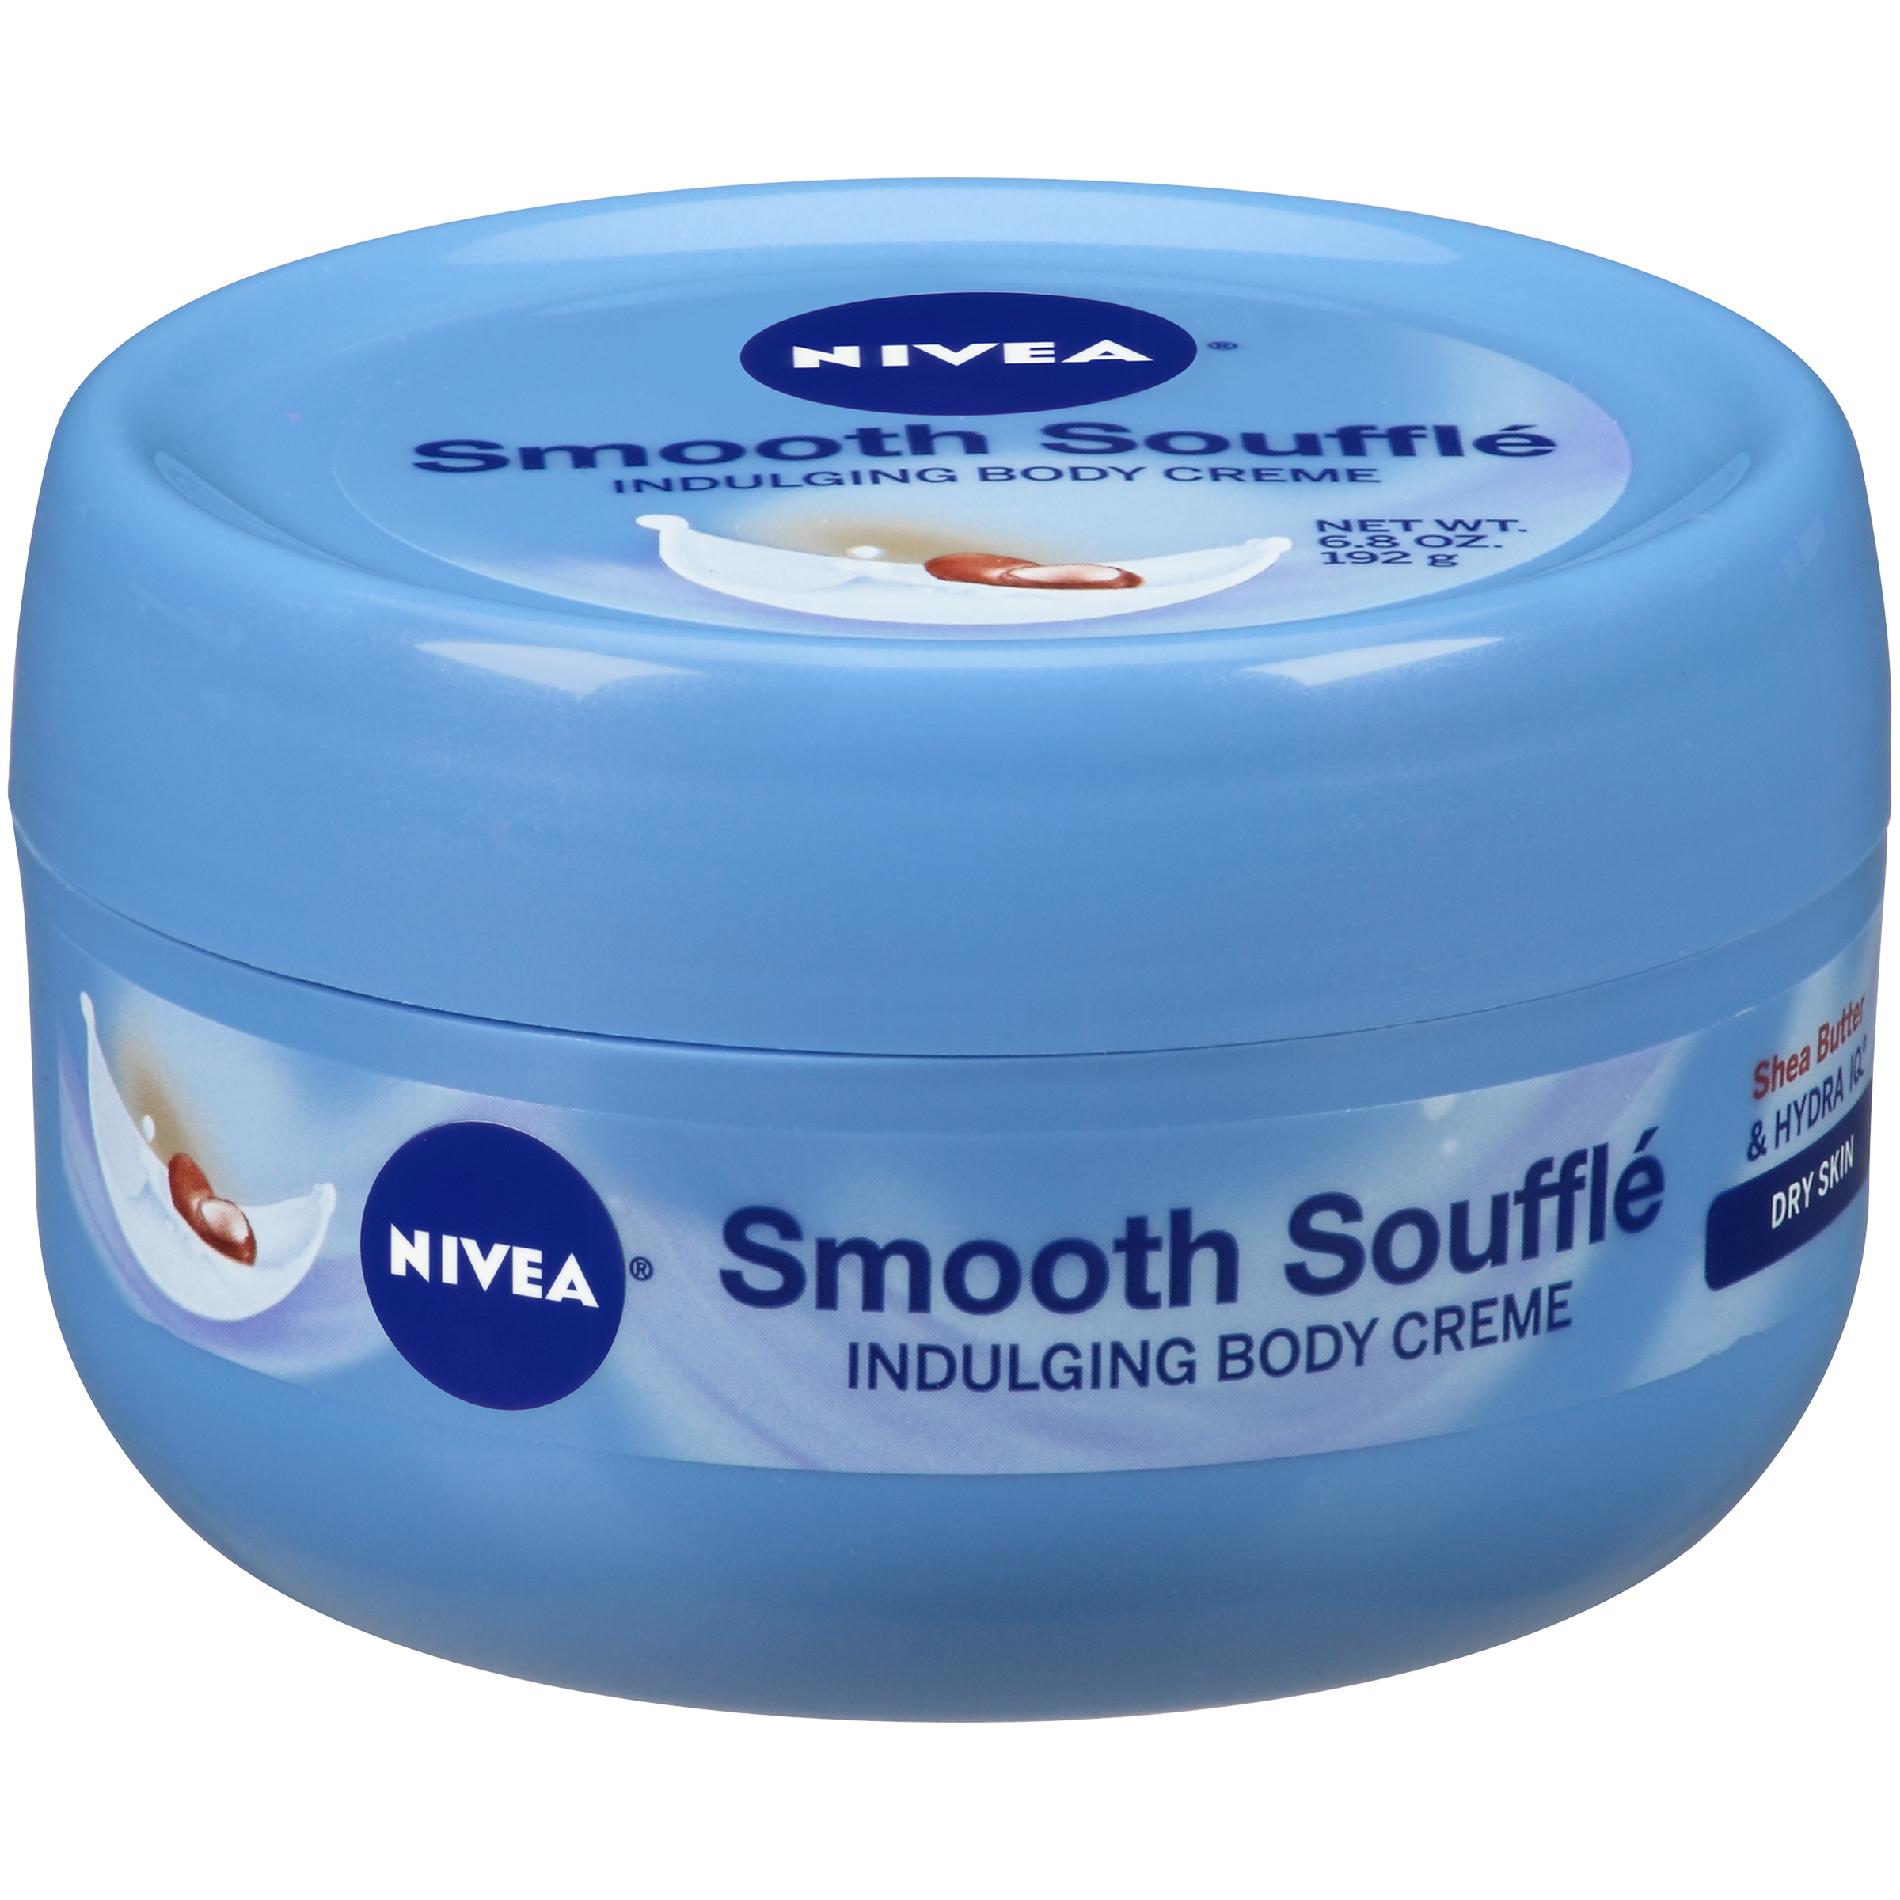 Nivea Smooth Souffle Indulging Body Creme, 6.8 oz